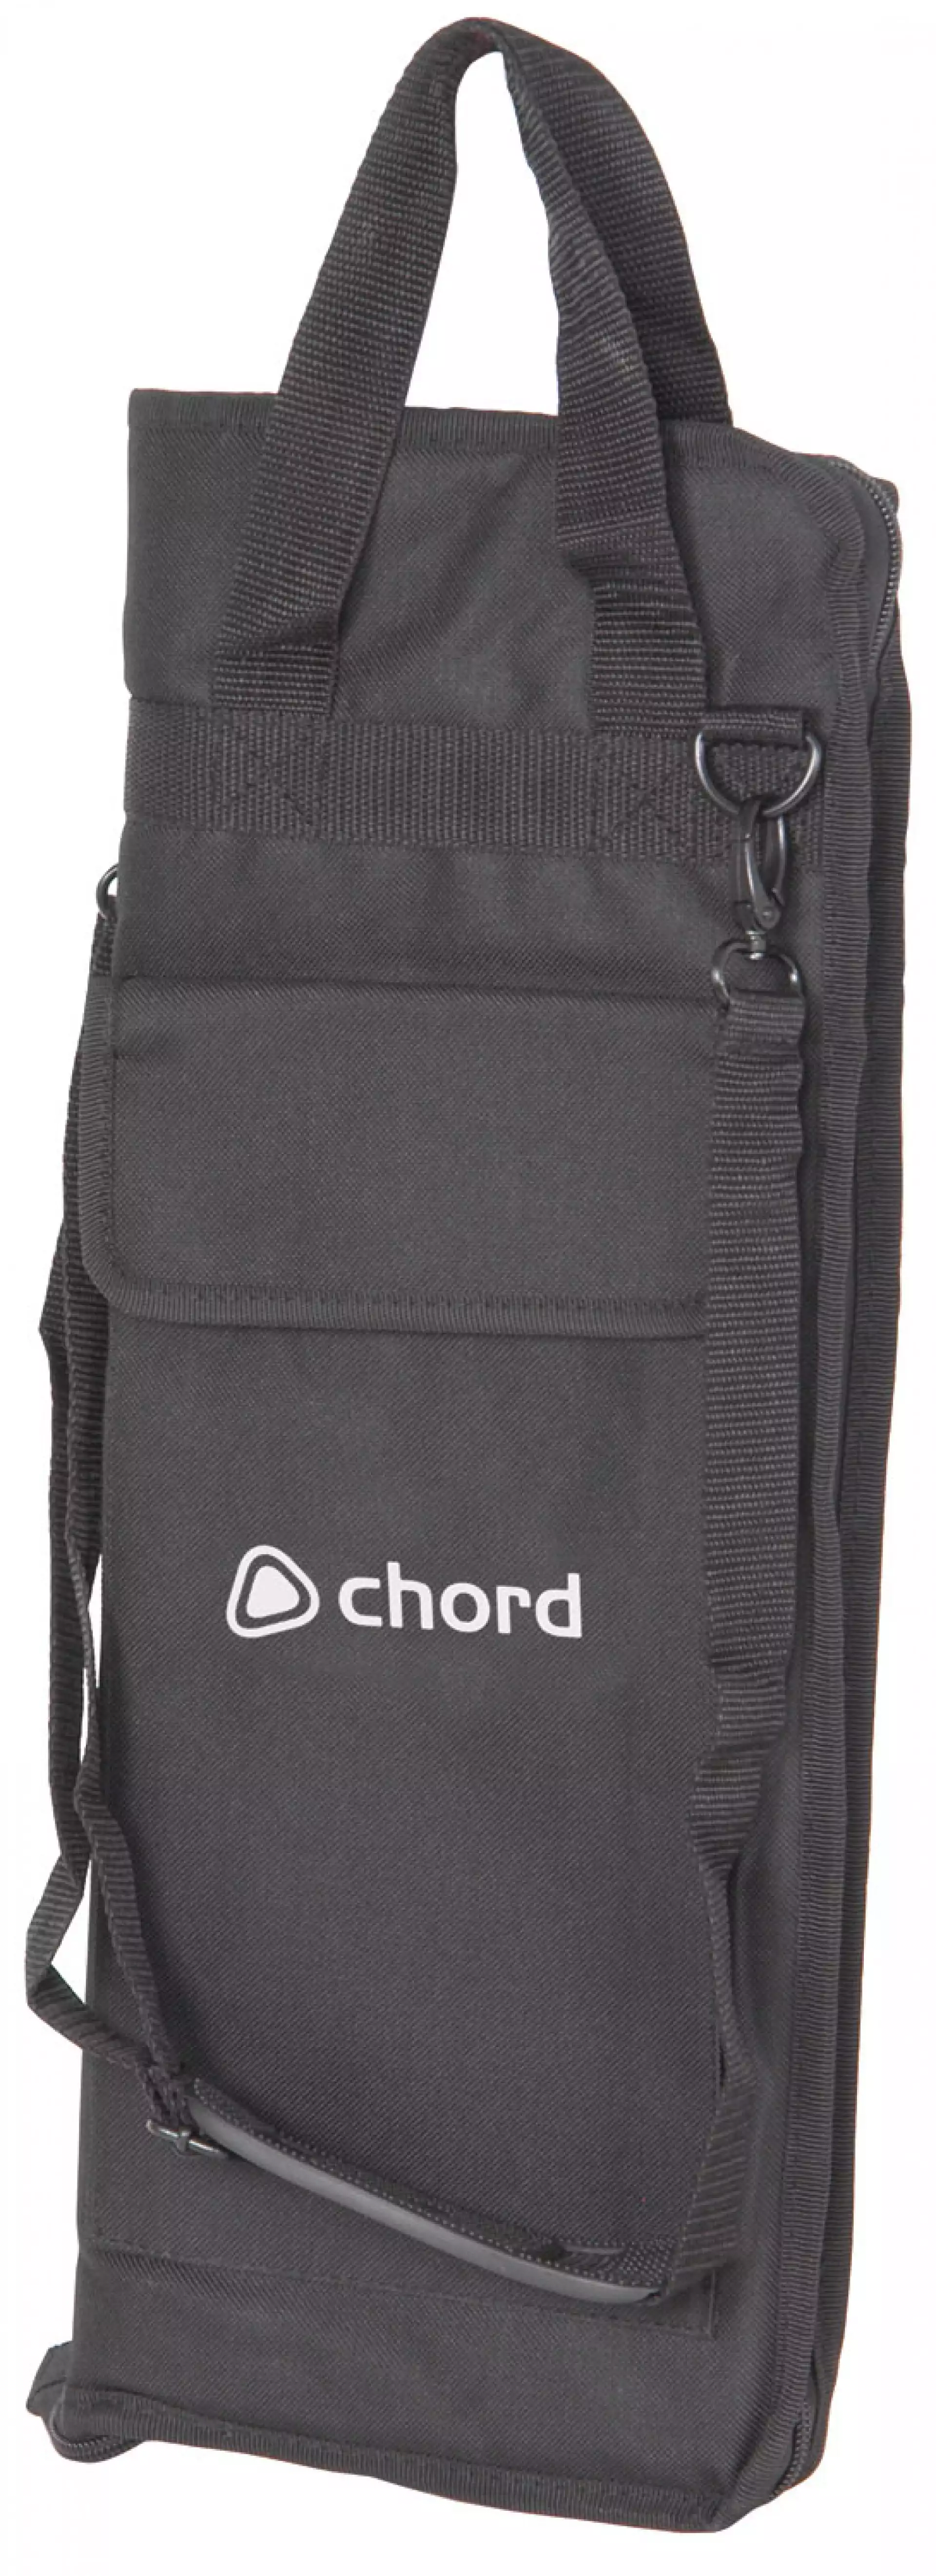 Chord Pro Drum Stick Bag